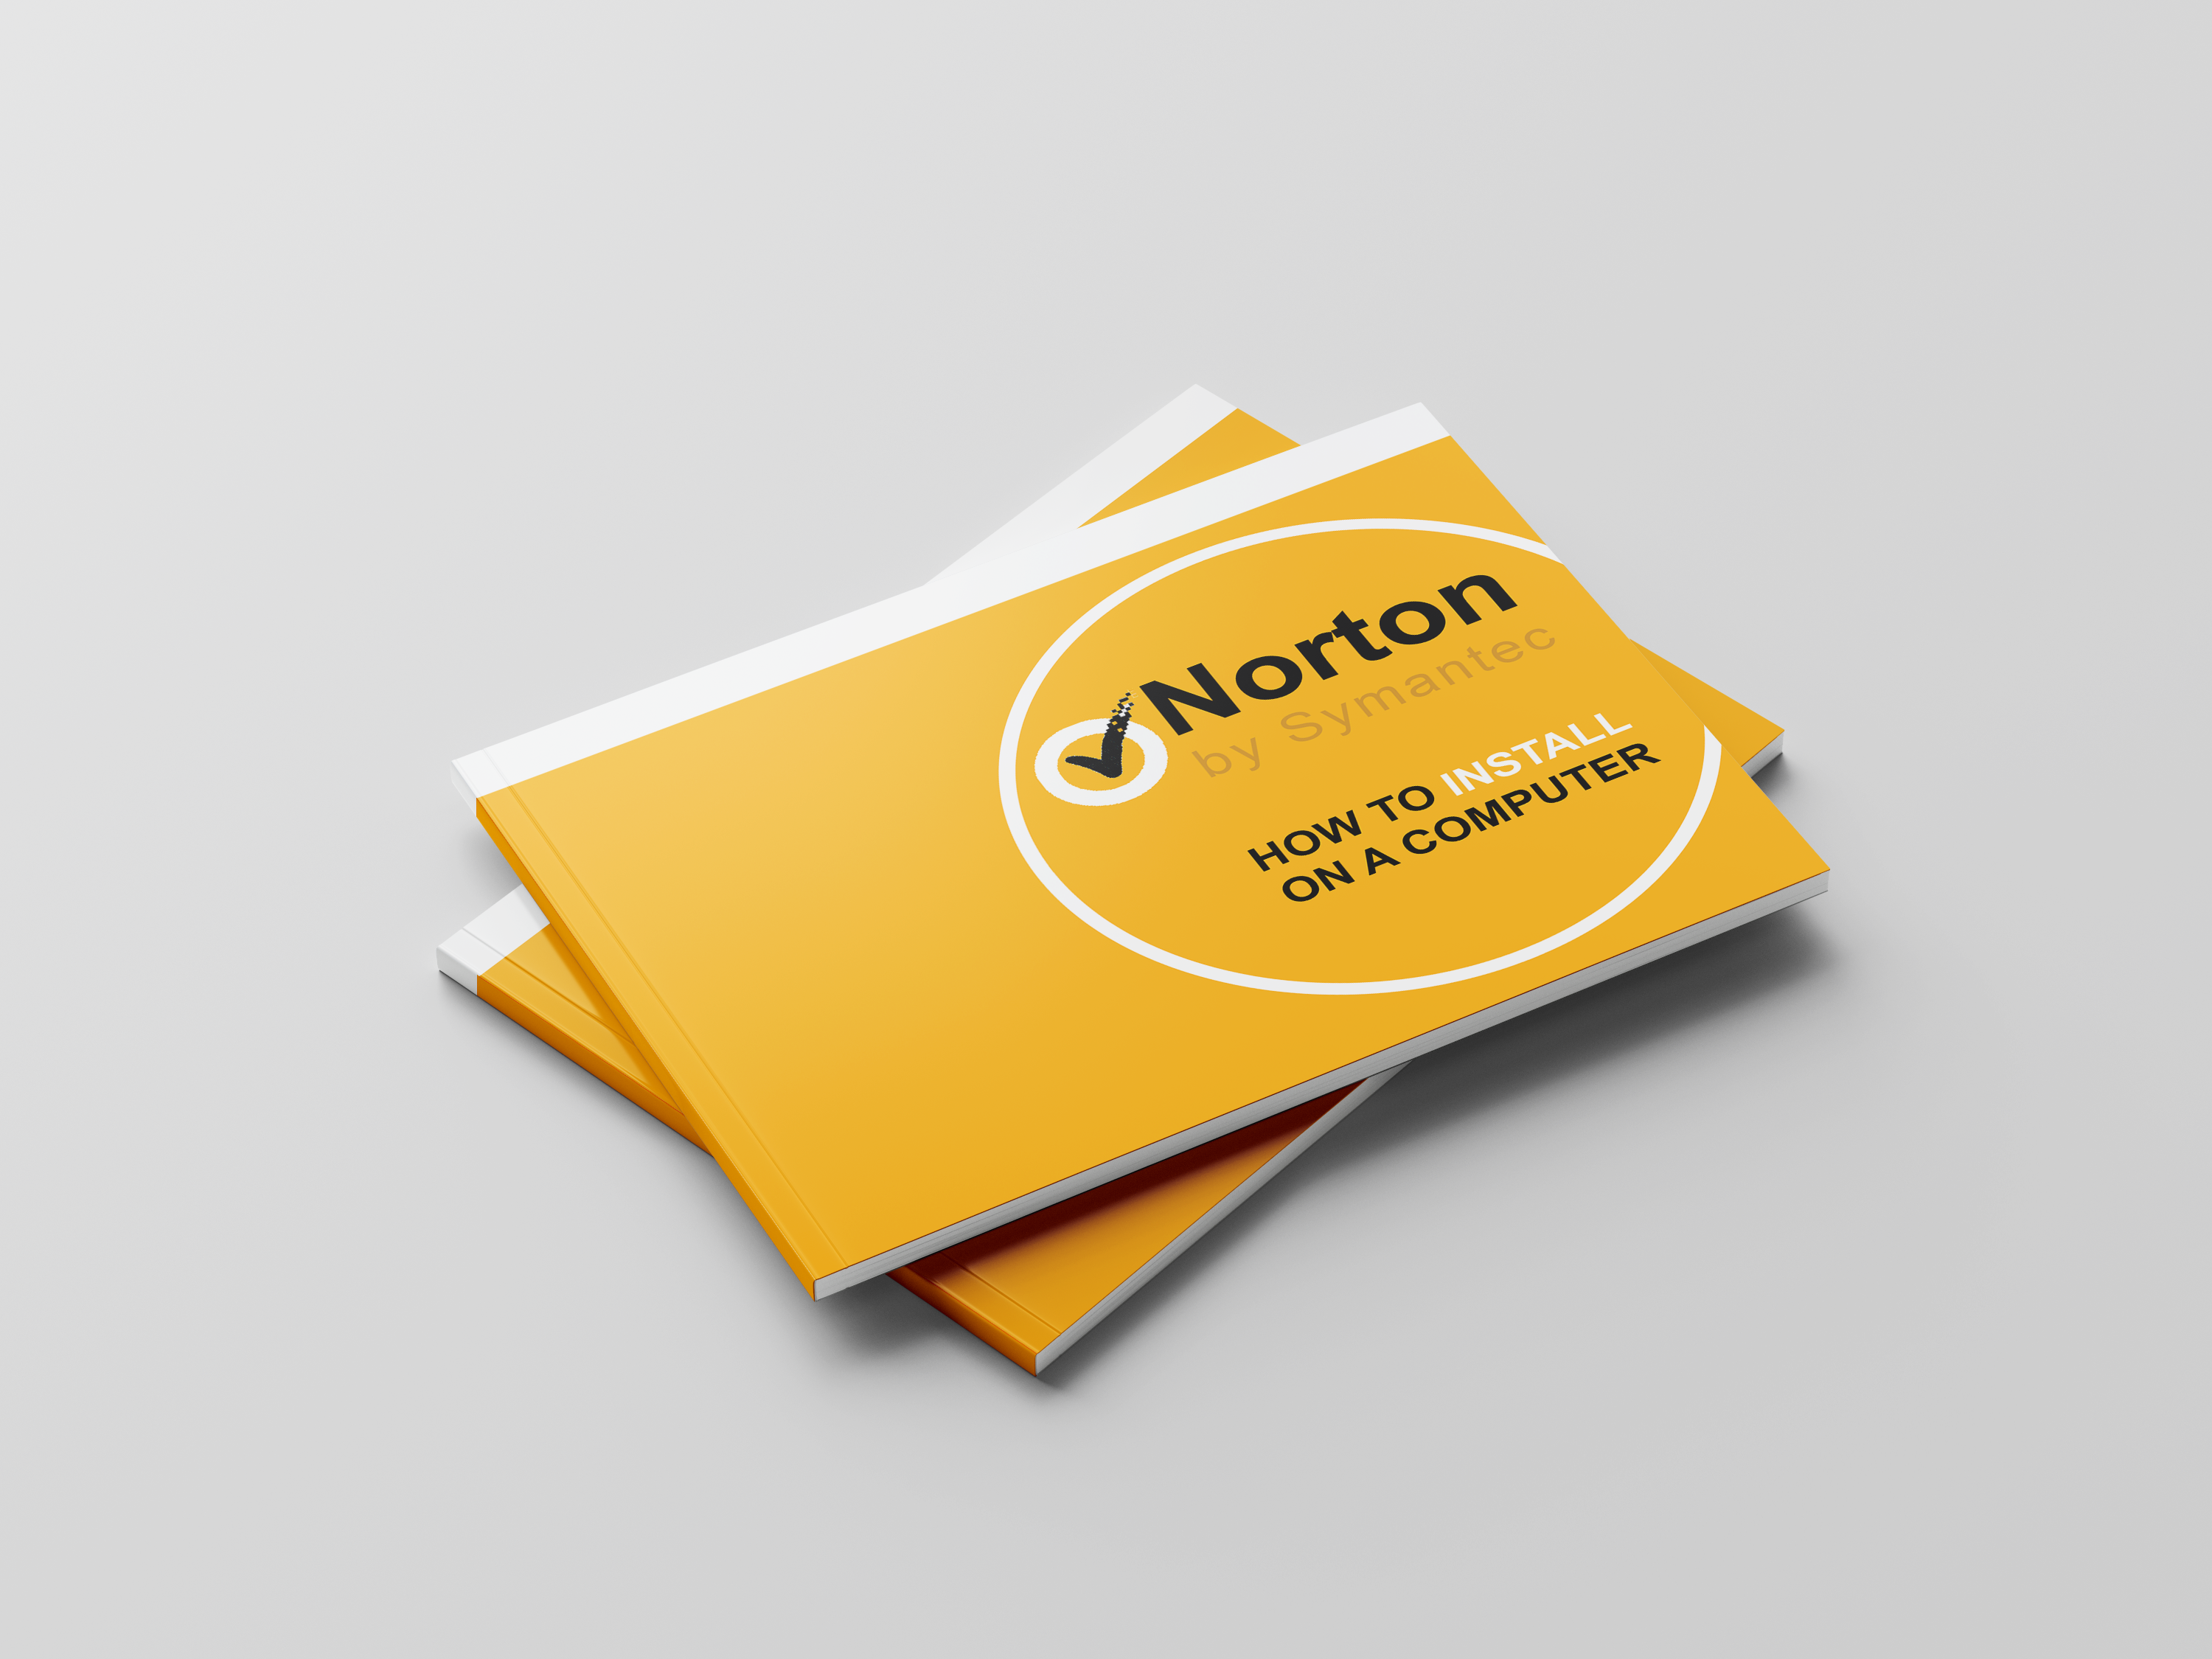 Norton Security Instruction Manual